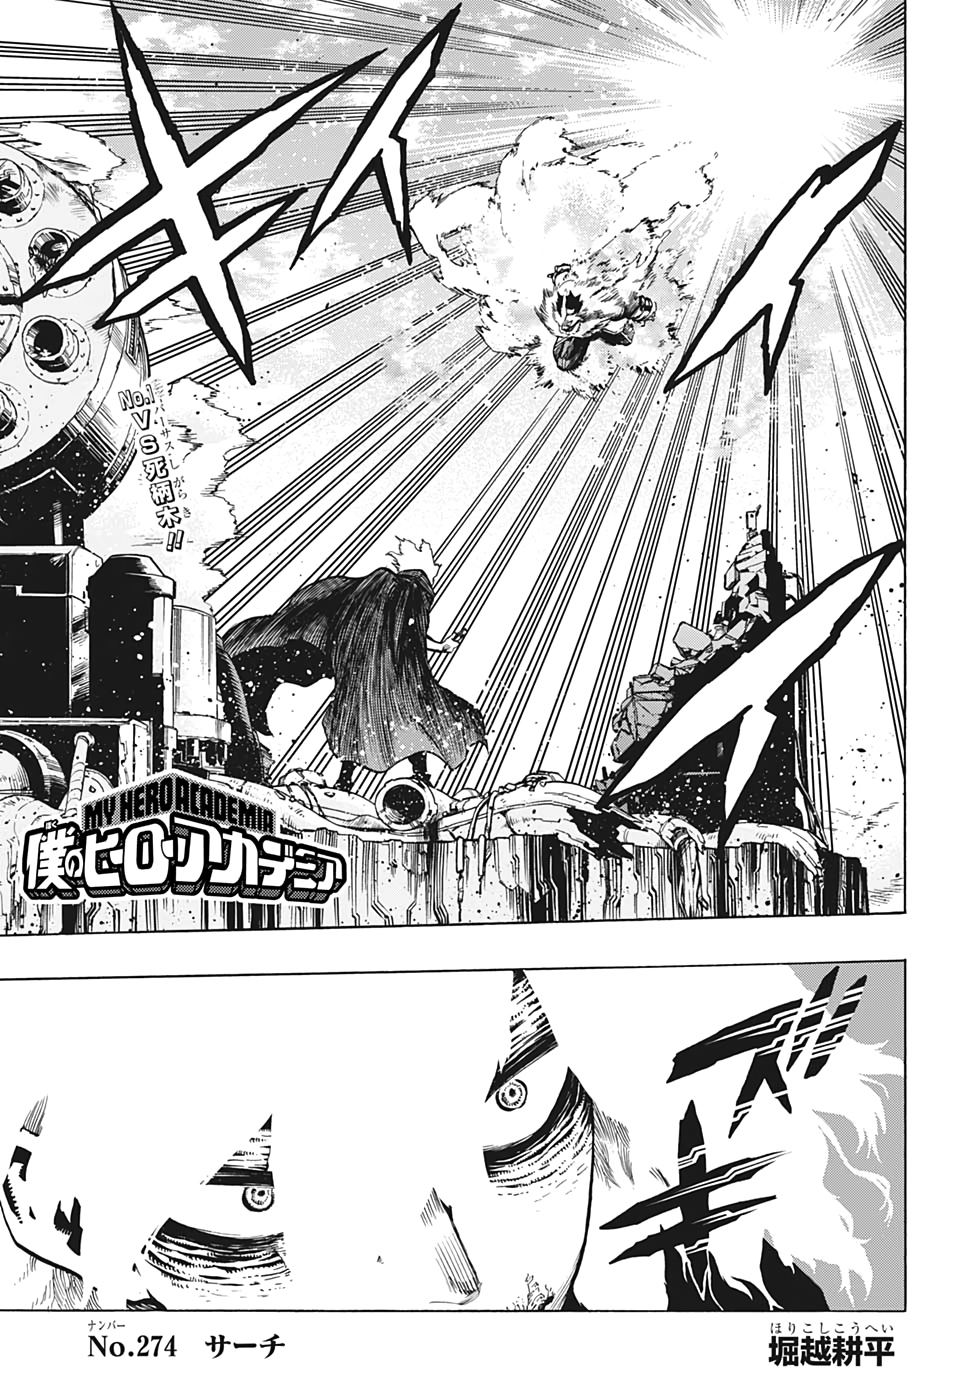 Boku no Hero Academia - Chapter 274 - Page 1